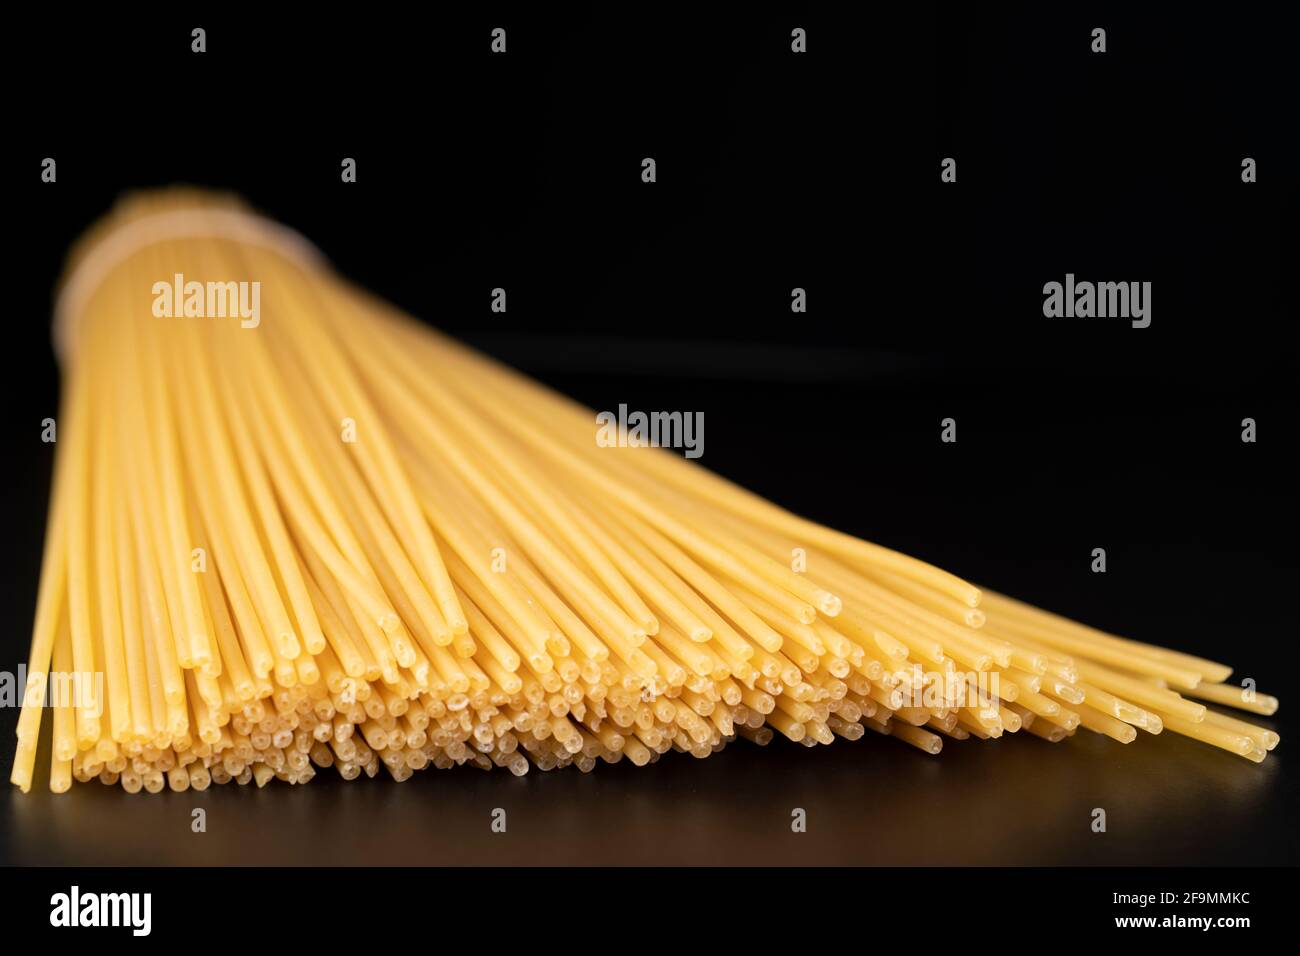 Extreme close-up image of spaghetti. Abstract image of spaghetti Stock Photo